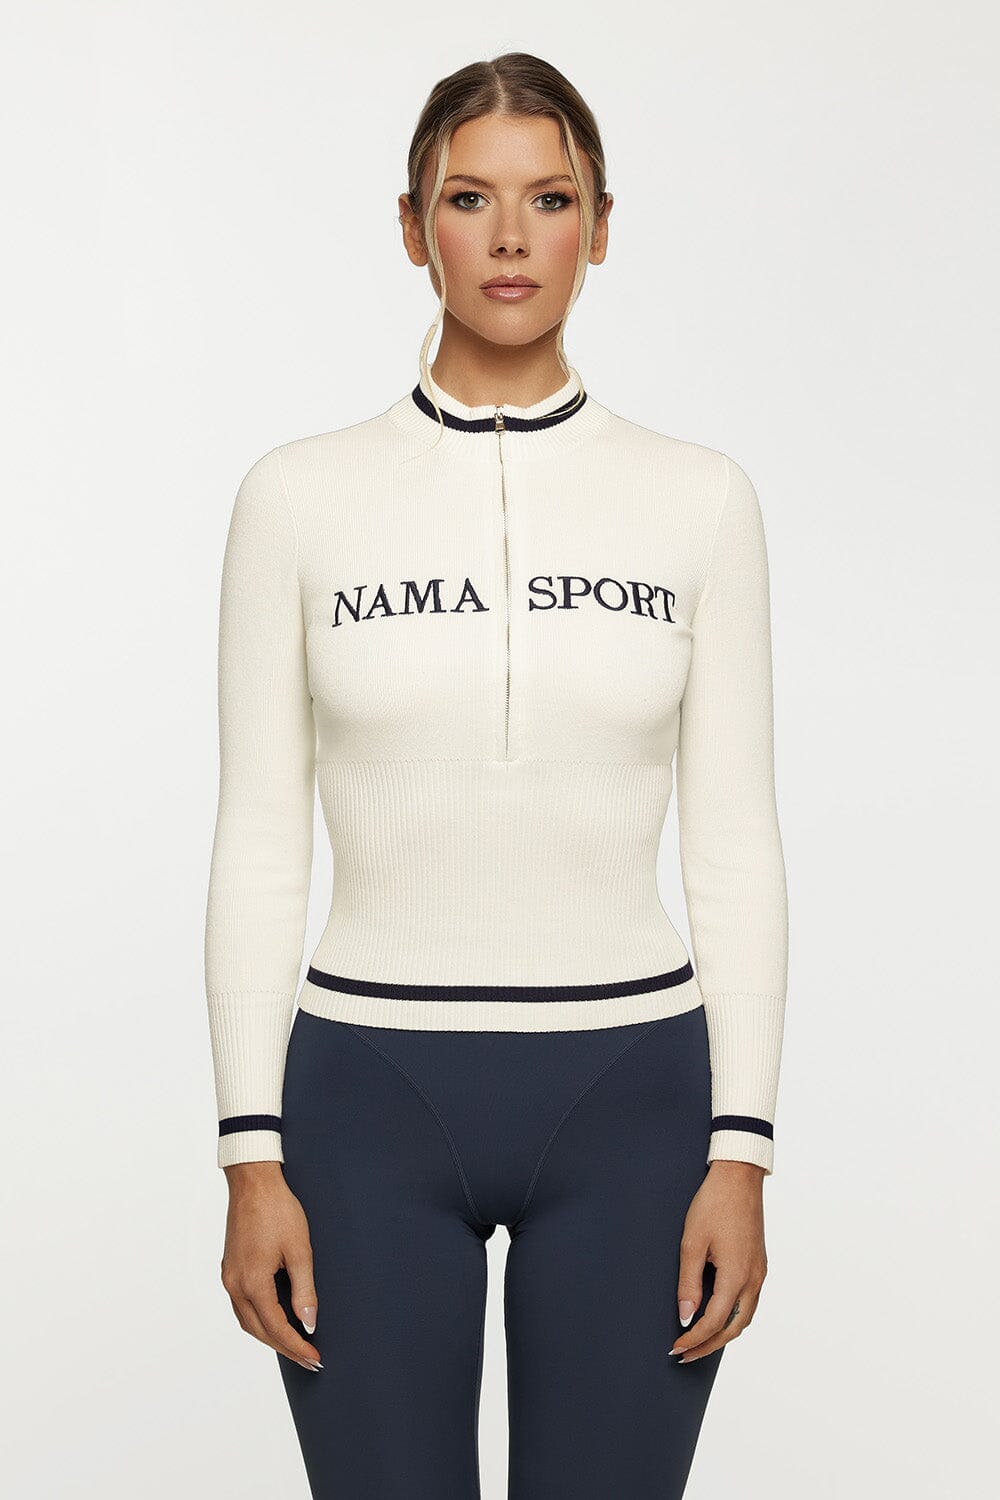 Nama Sport Sweater